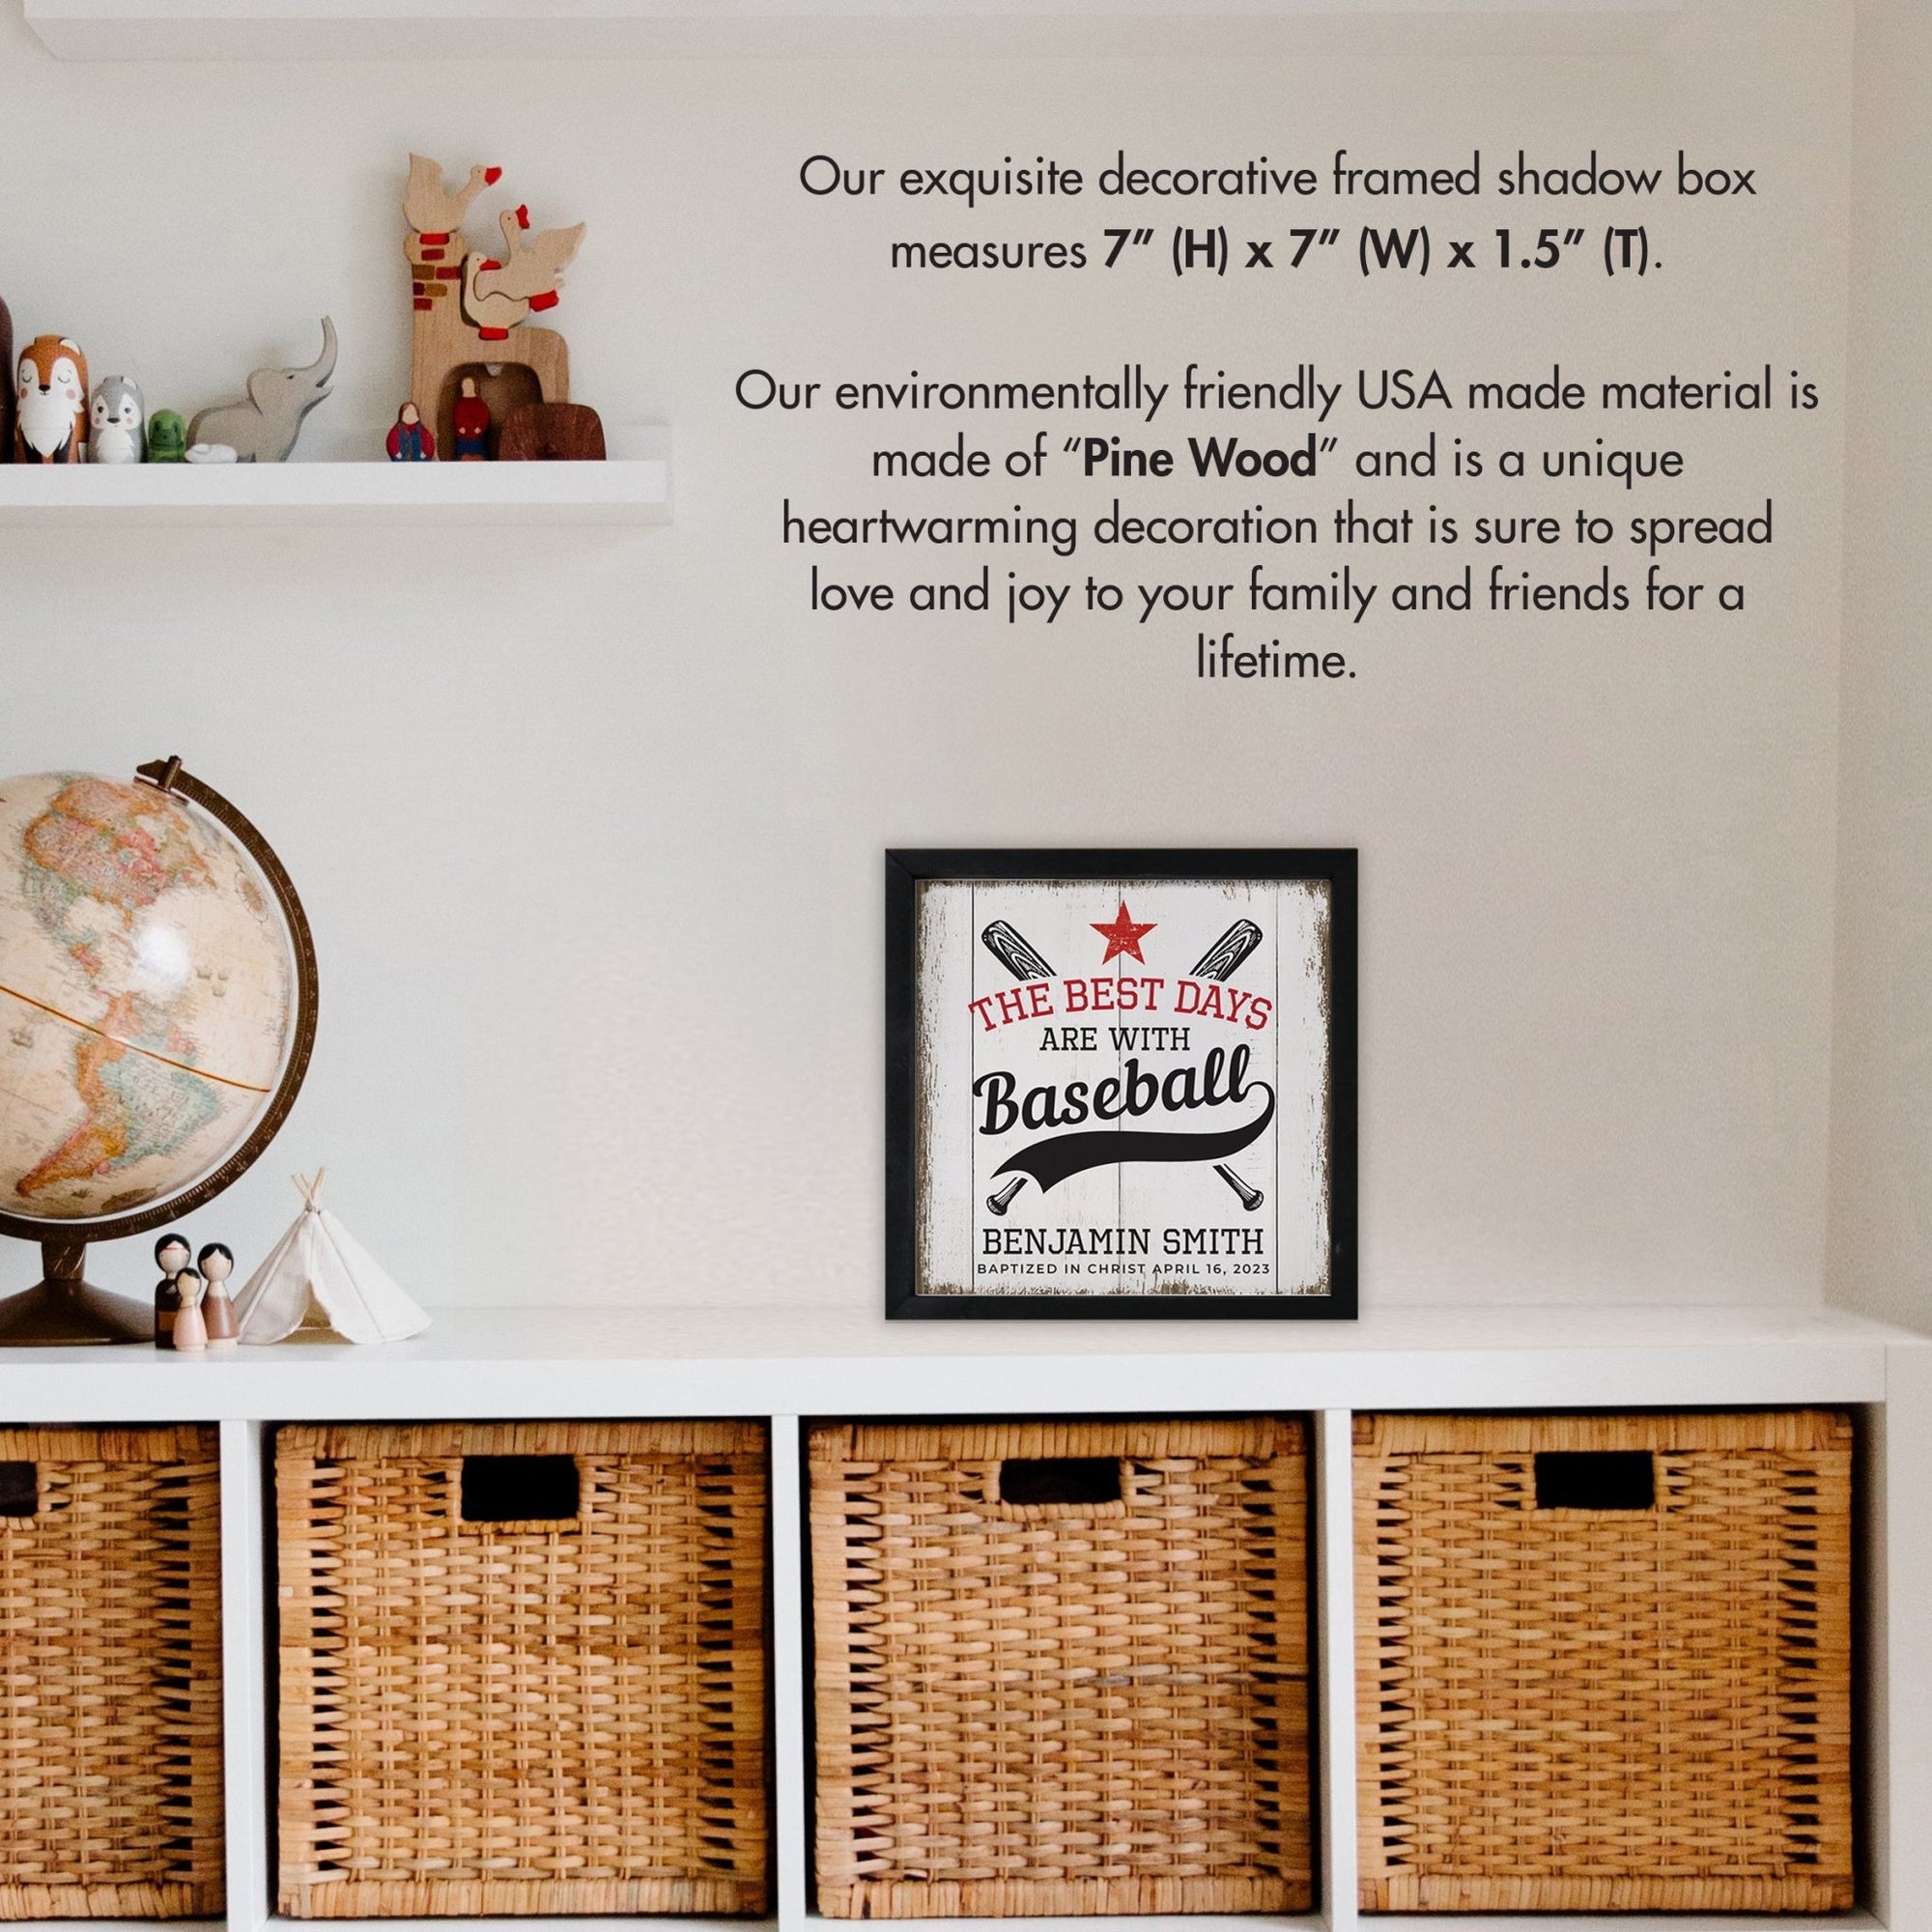 Personalized Rustic Wooden Baseball Shadow Box Shelf Décor With Inspiring Bible Verses - Balls, Bats, & Baseball Hats - LifeSong Milestones